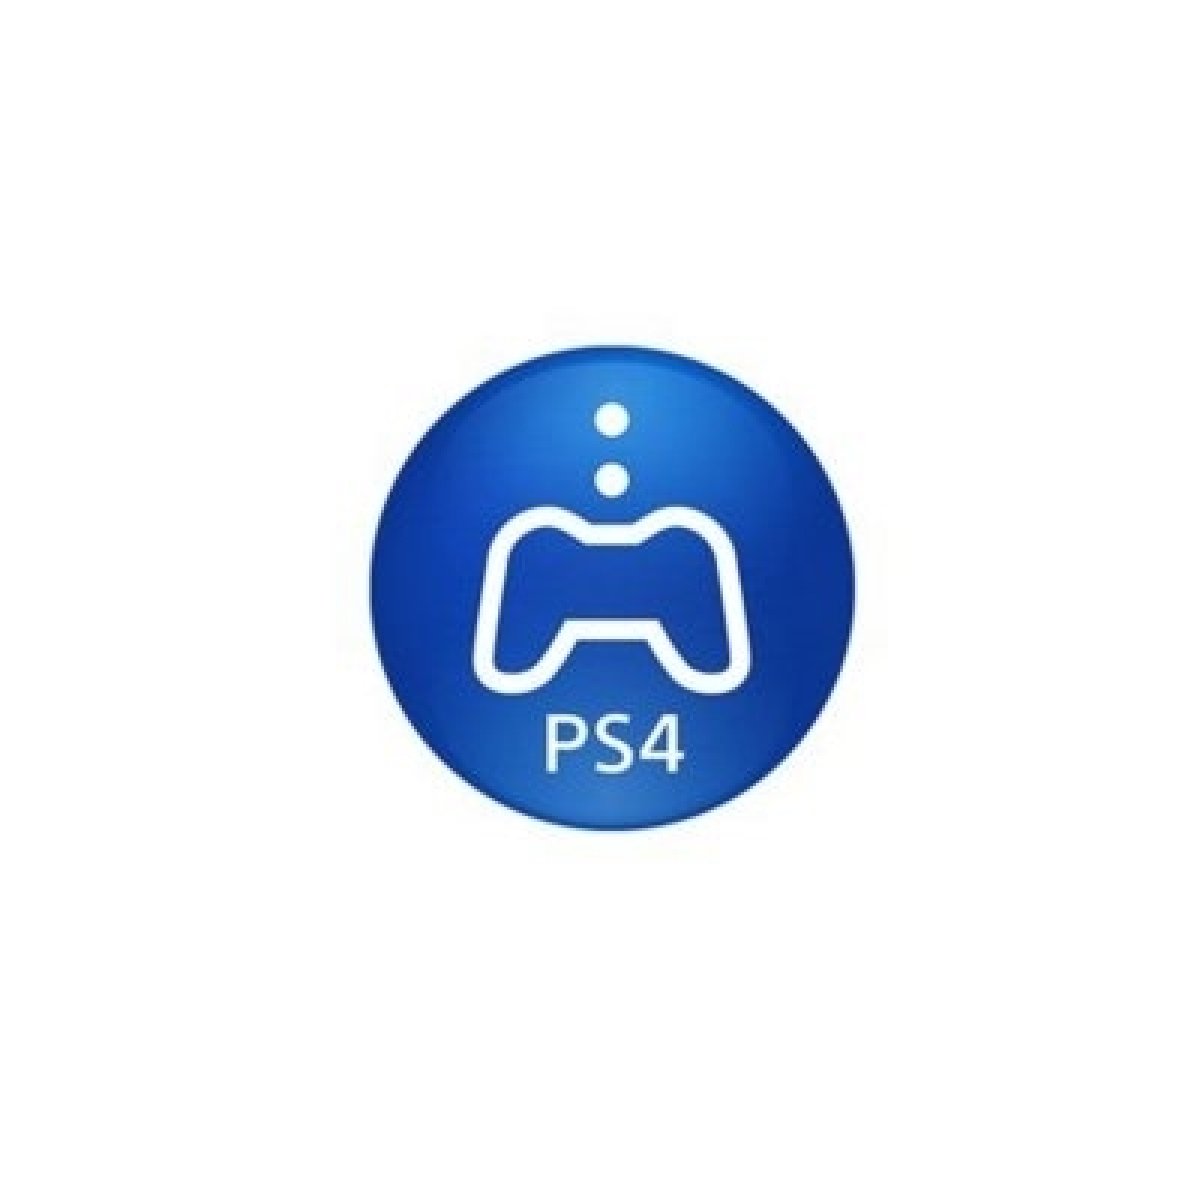 Zahrajte si hry z PS4